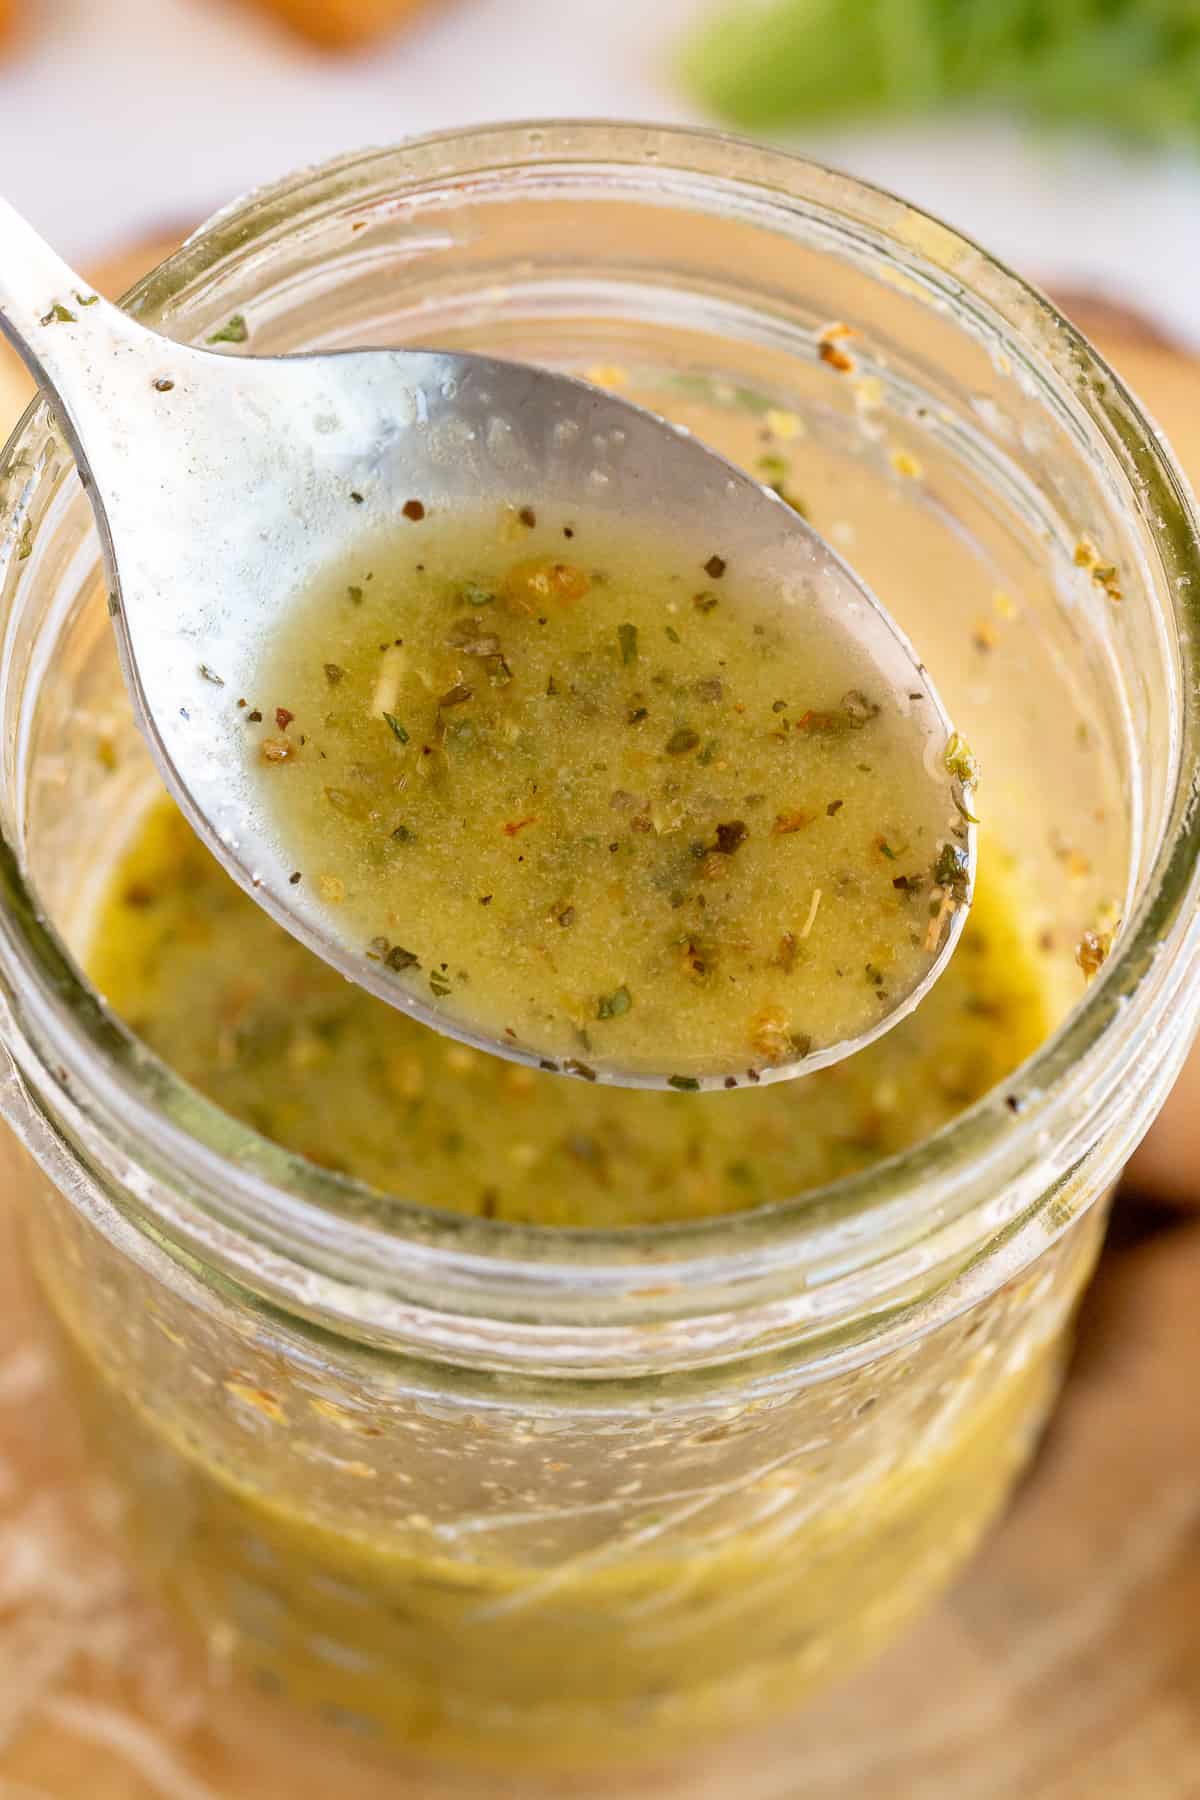 A close up of a spoon lifting salad dressing from a mason jar.